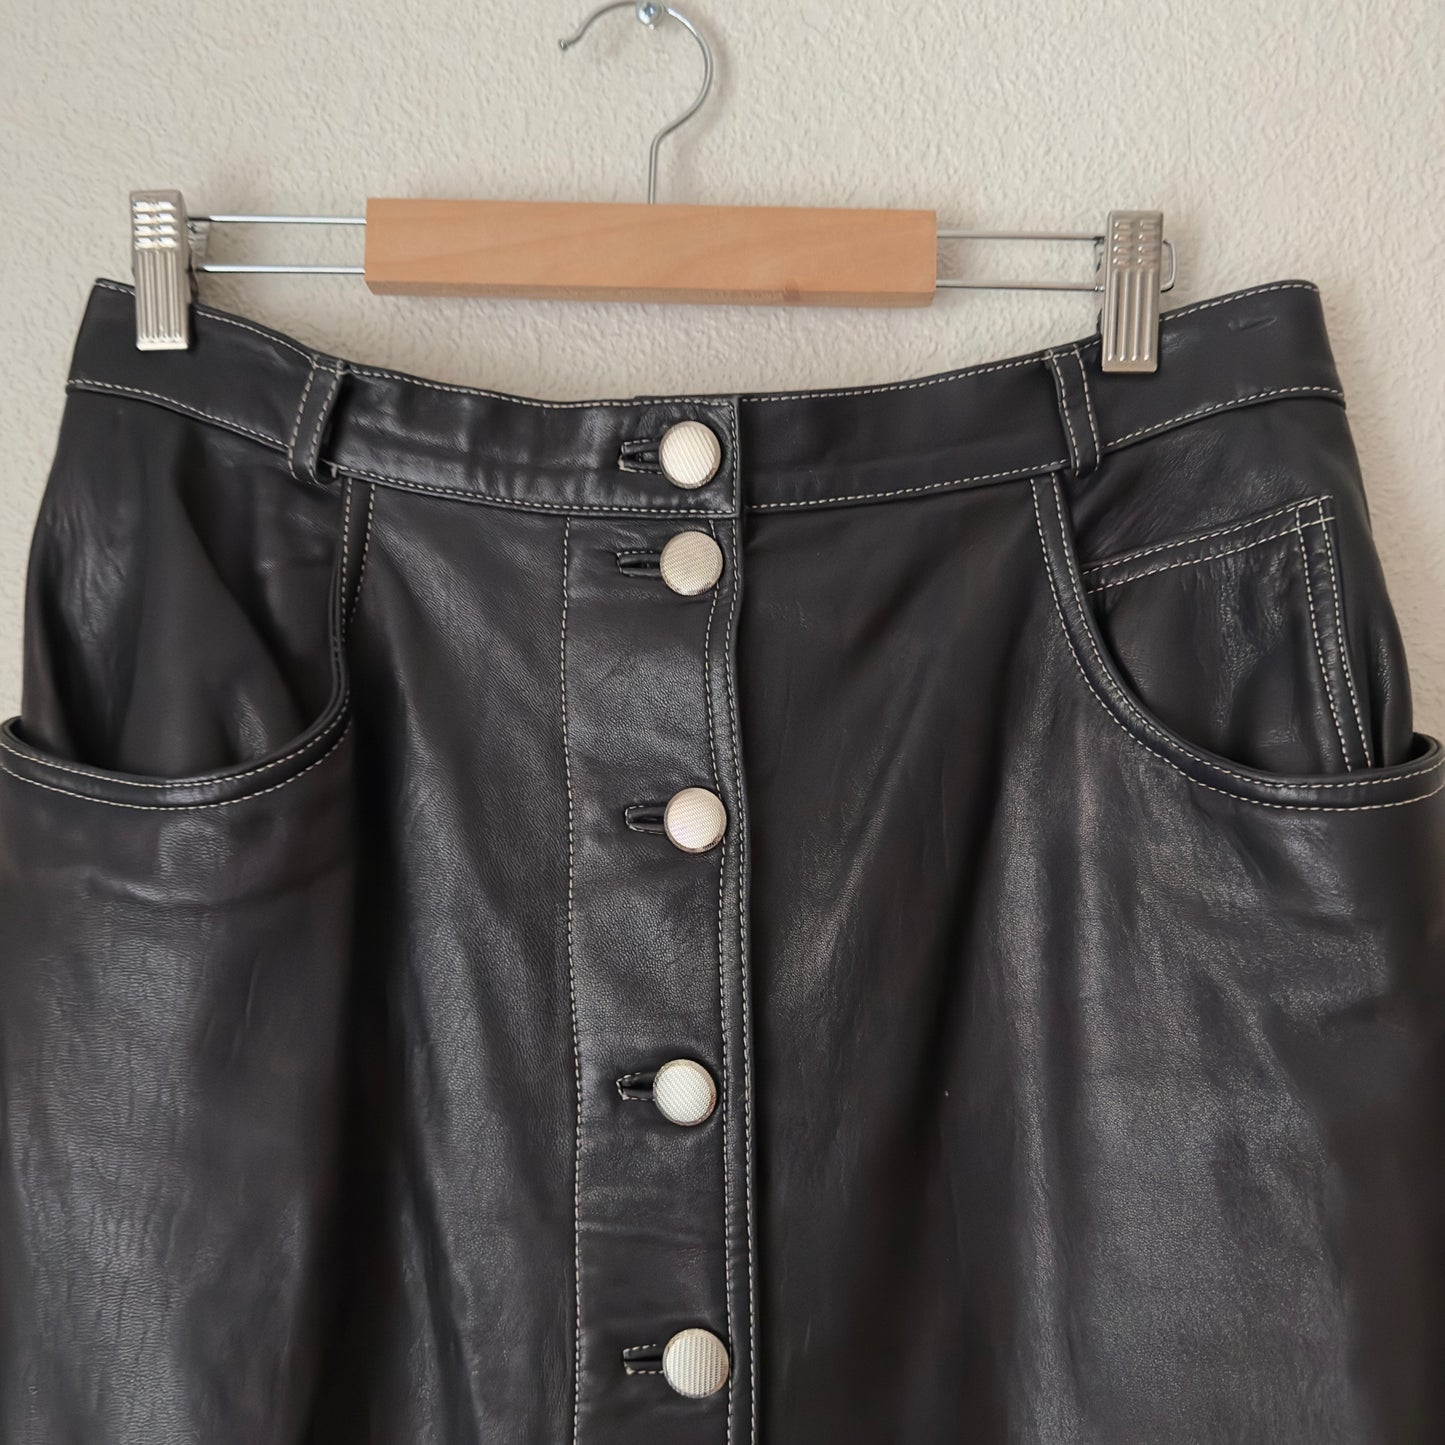 Vintage Leather Skirt - Size M